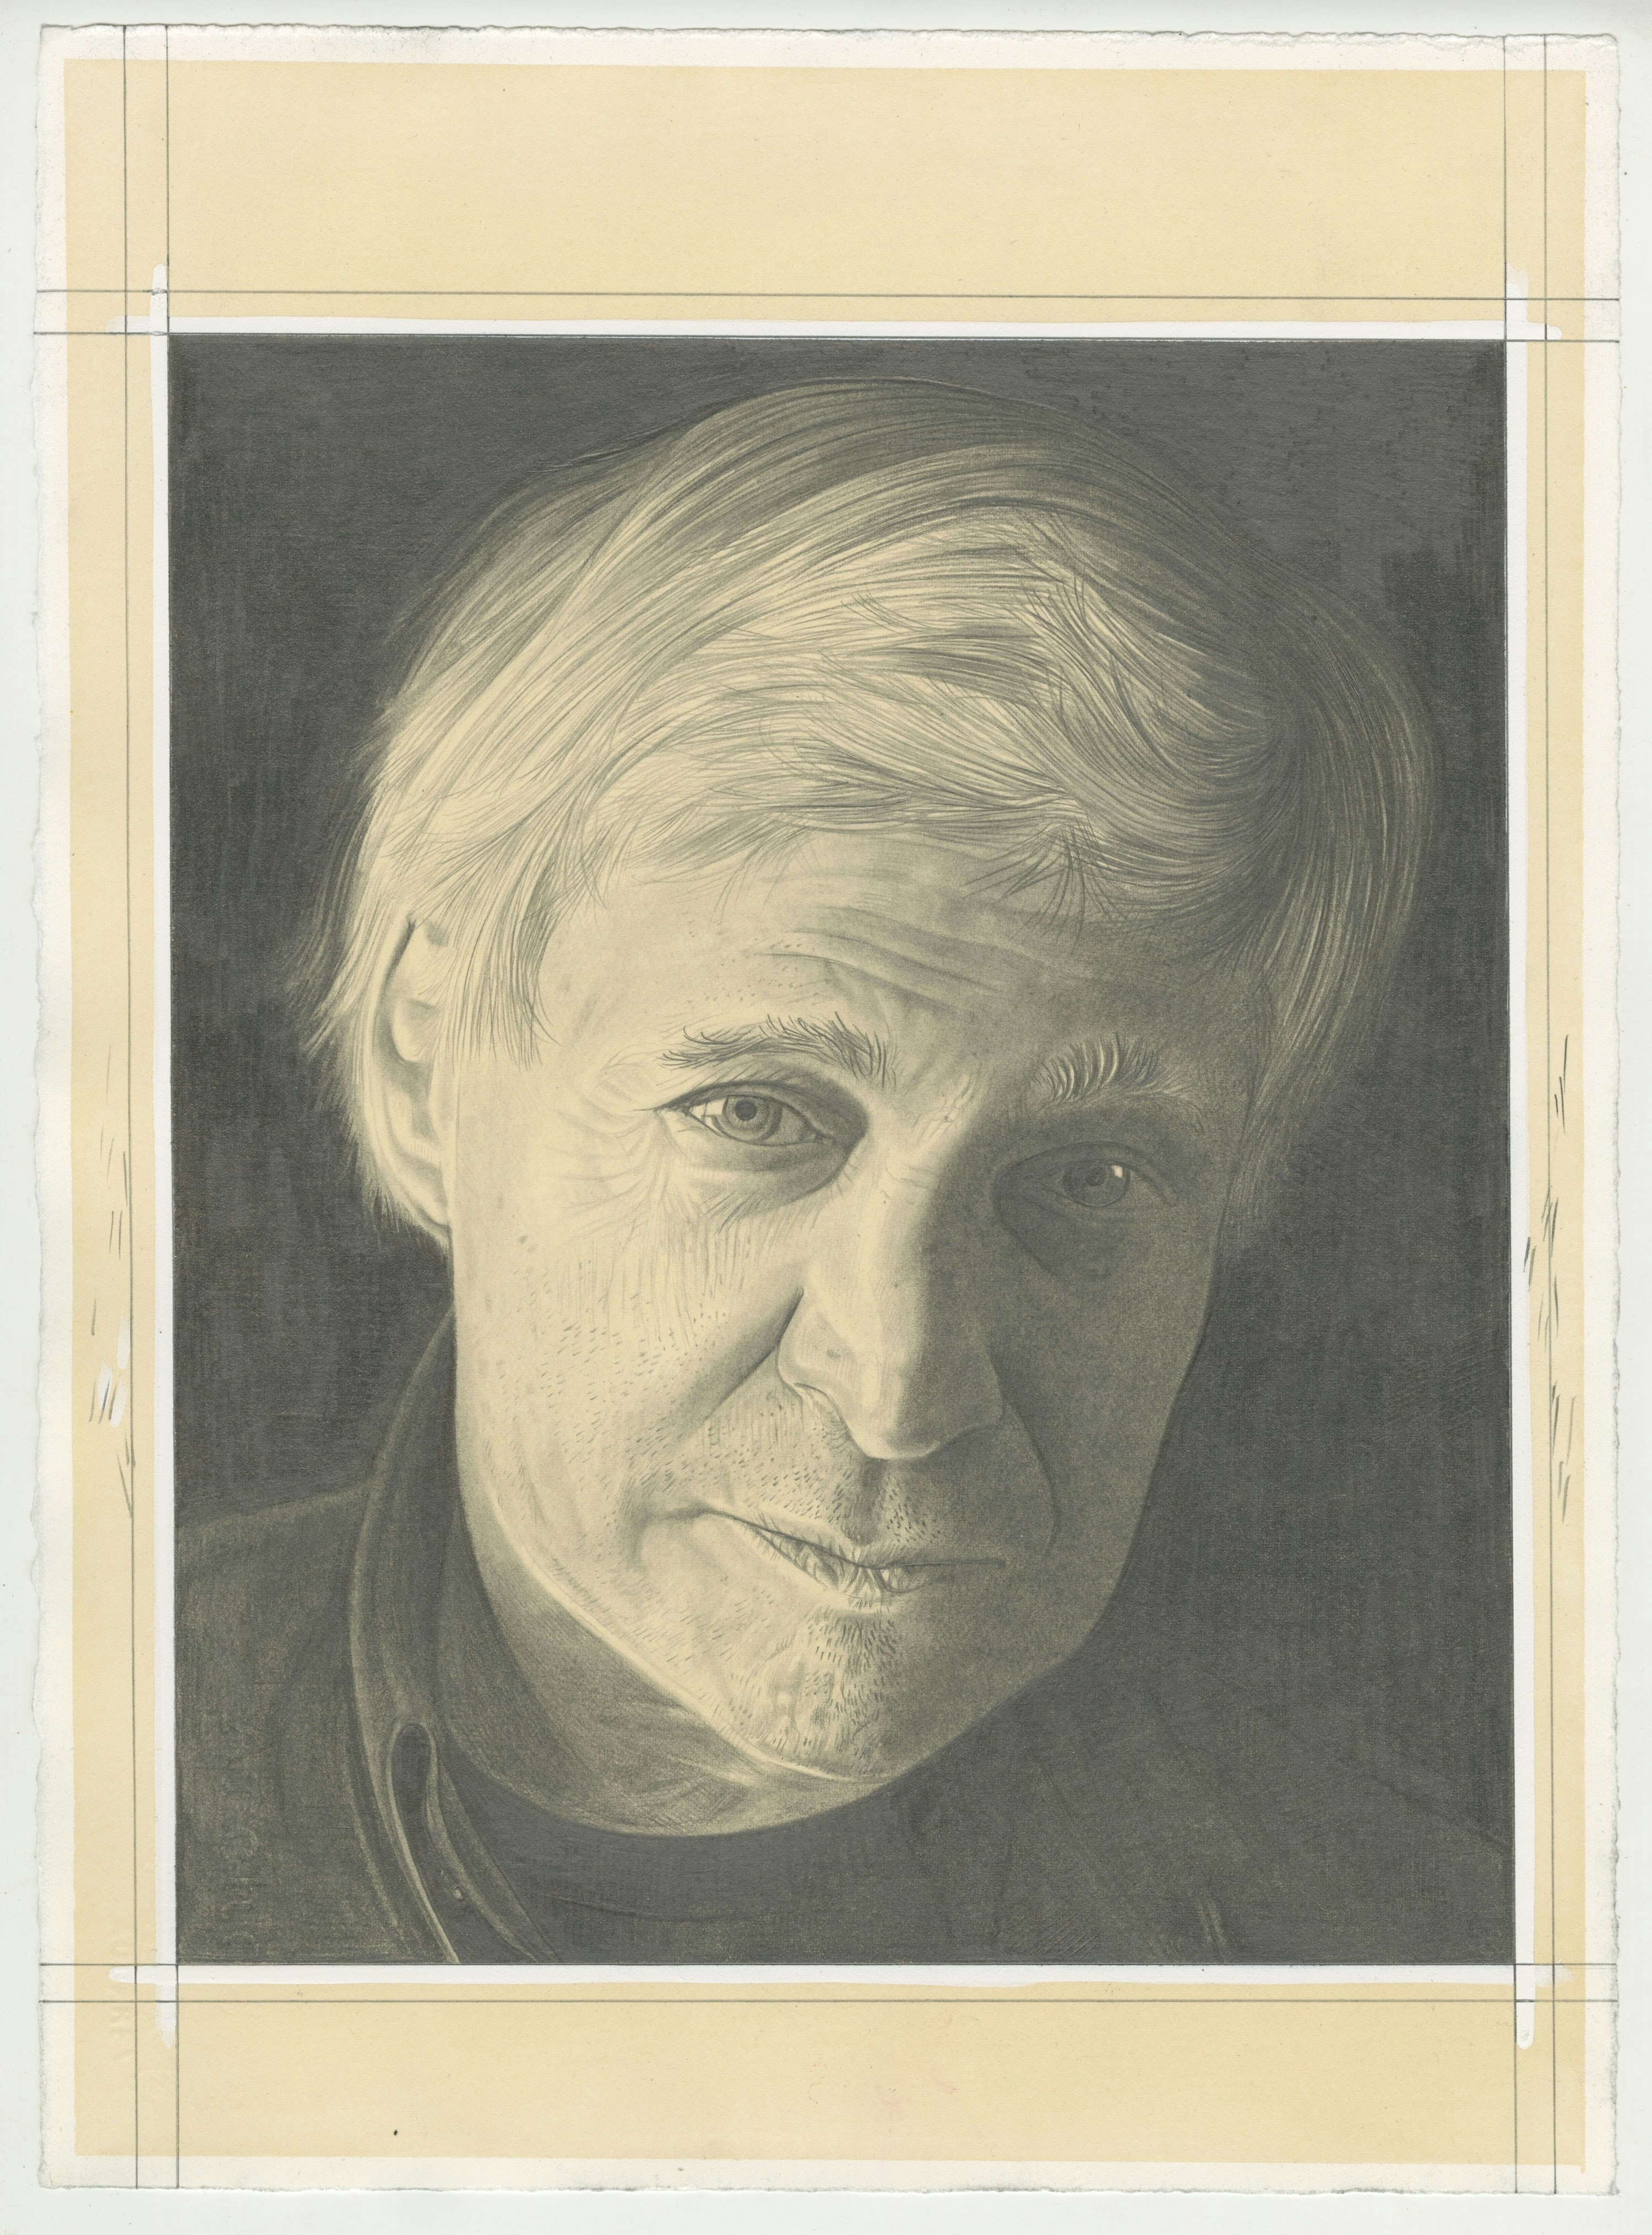 Portrait of Steve Dalachinsky, pencil on paper by Phong Bui.